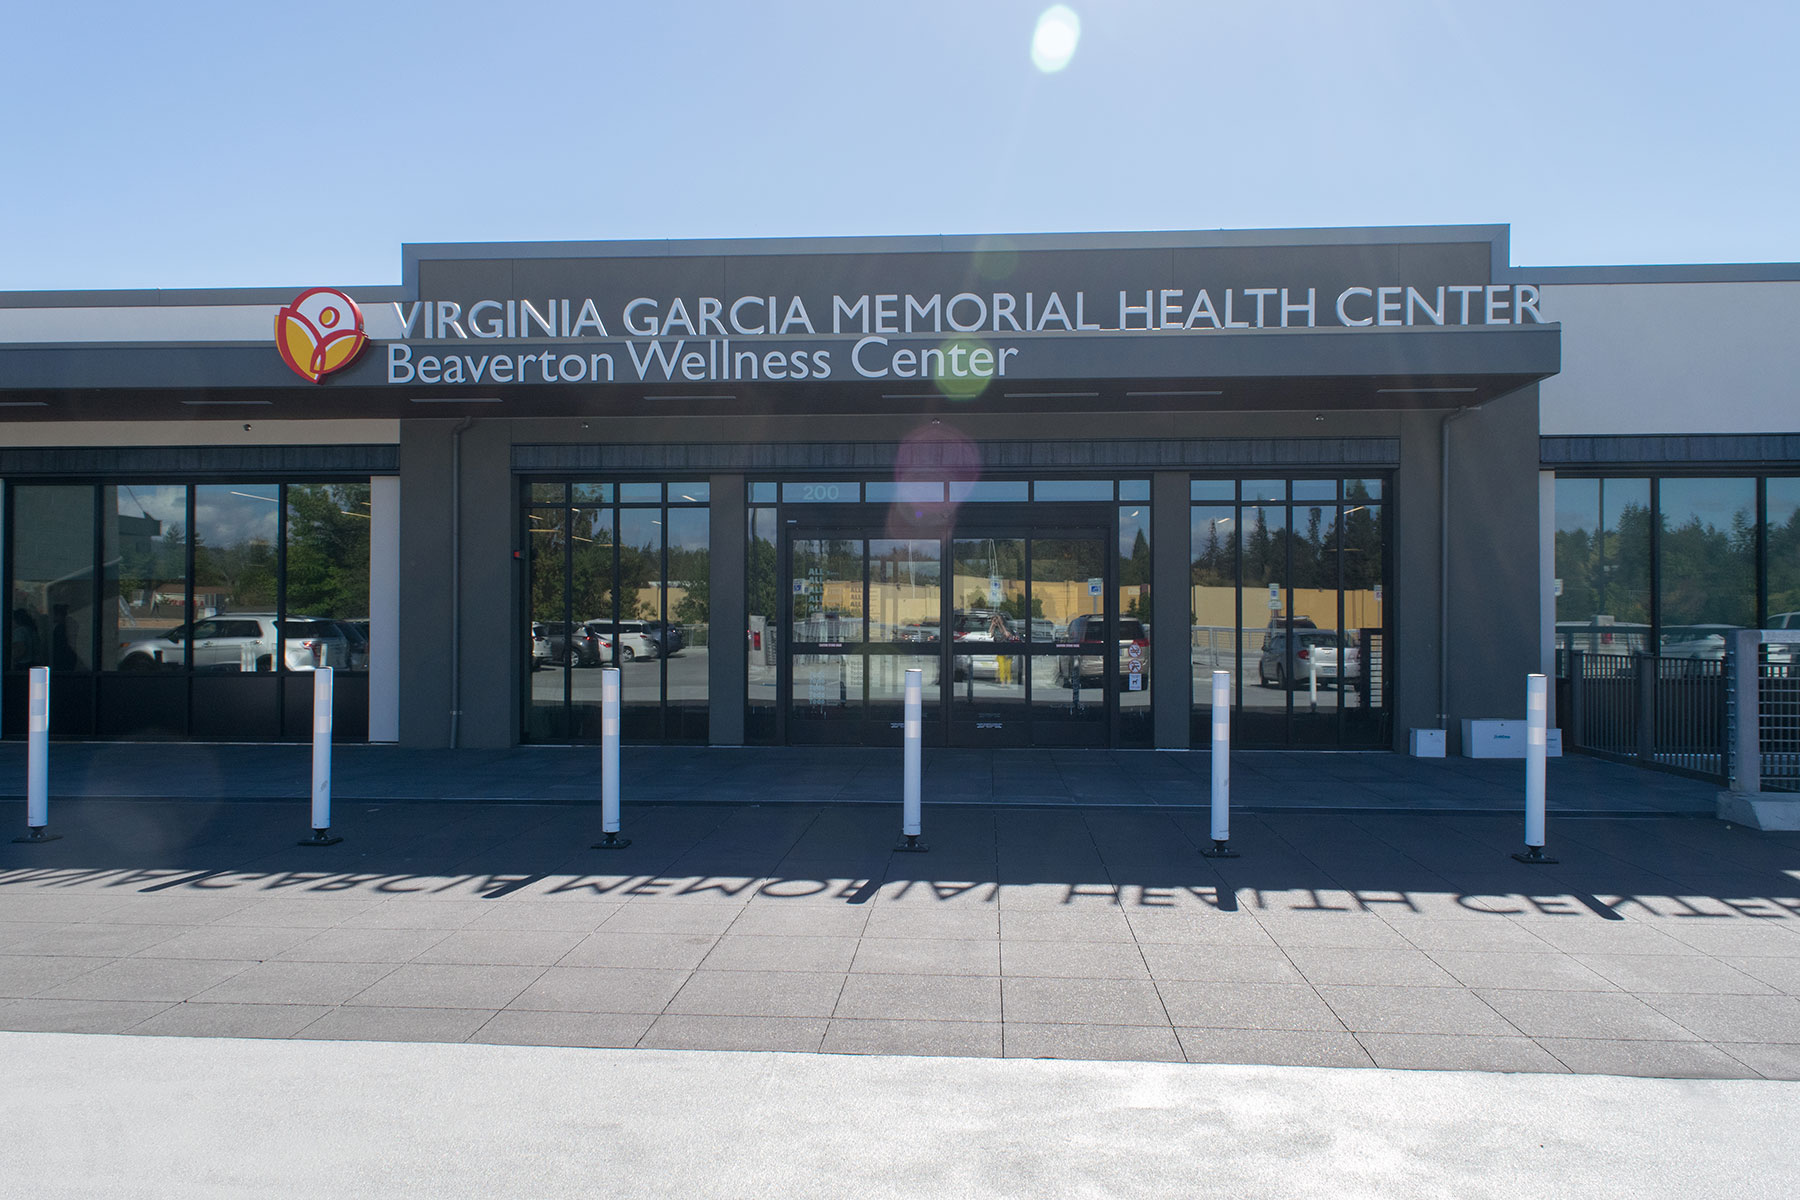 Beaverton Wellness Center - Virginia Garcia Memorial Health Center